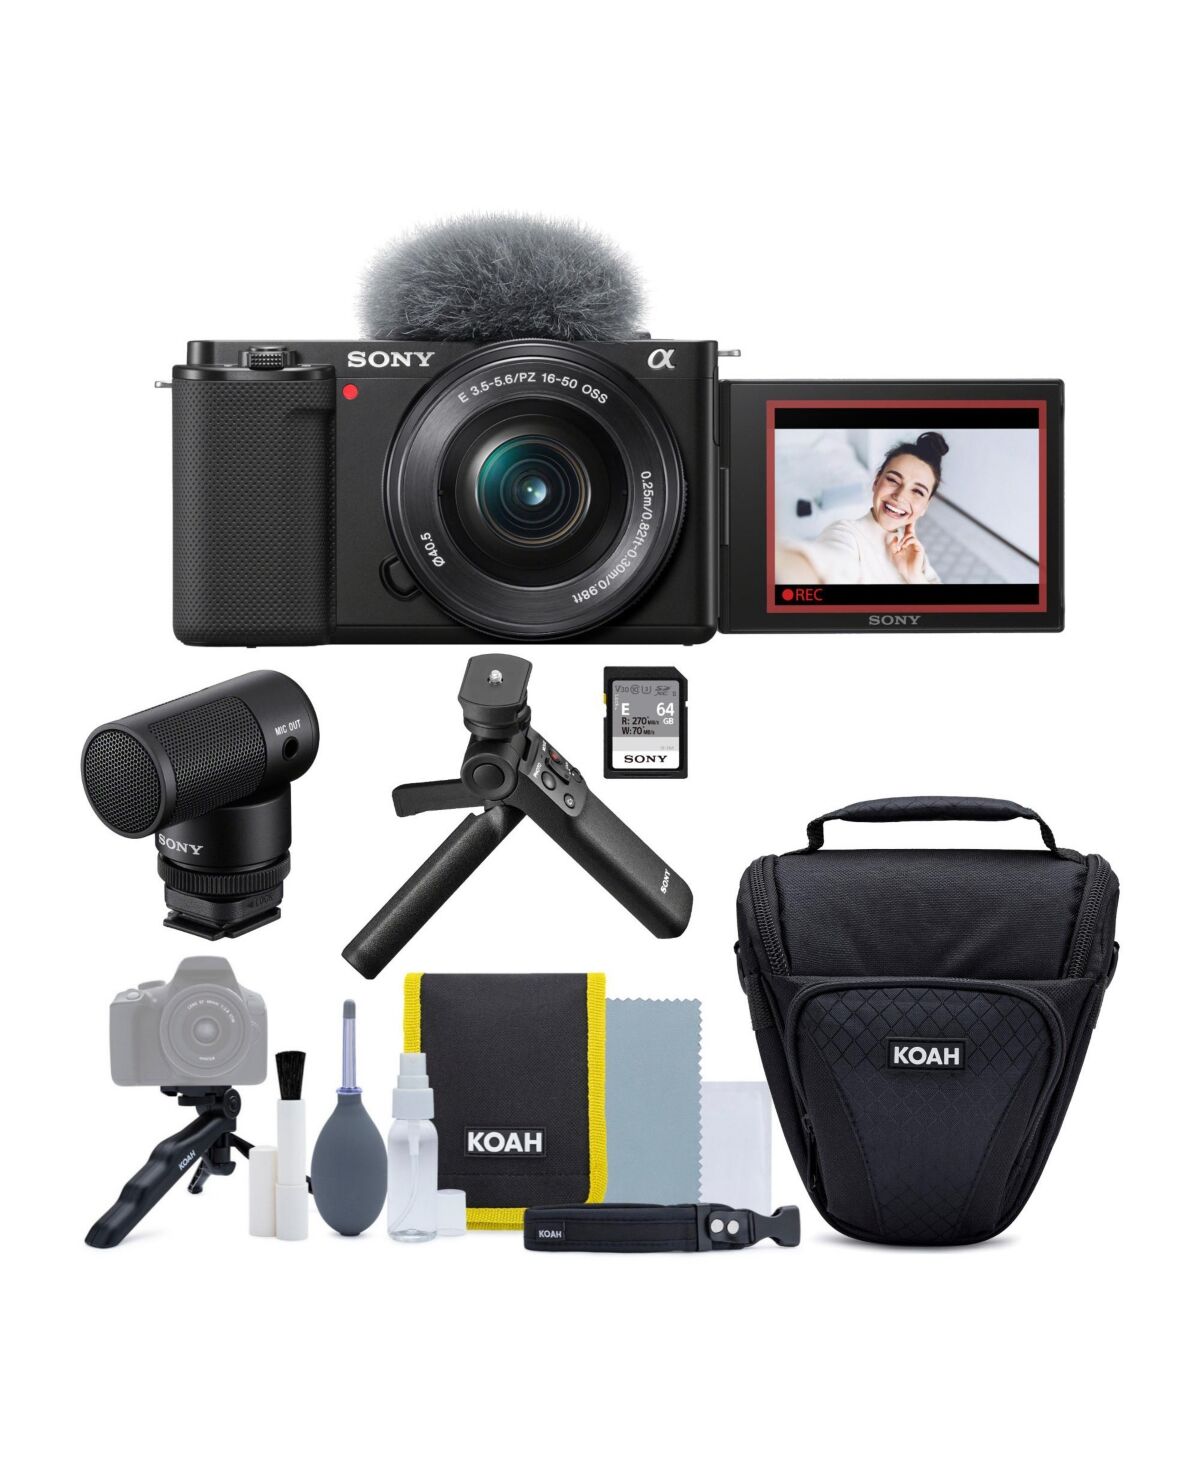 Sony Alpha Zv-E10 Aps-c (Black) with 16-50mm Lens Bundle with Creator Kit - Black